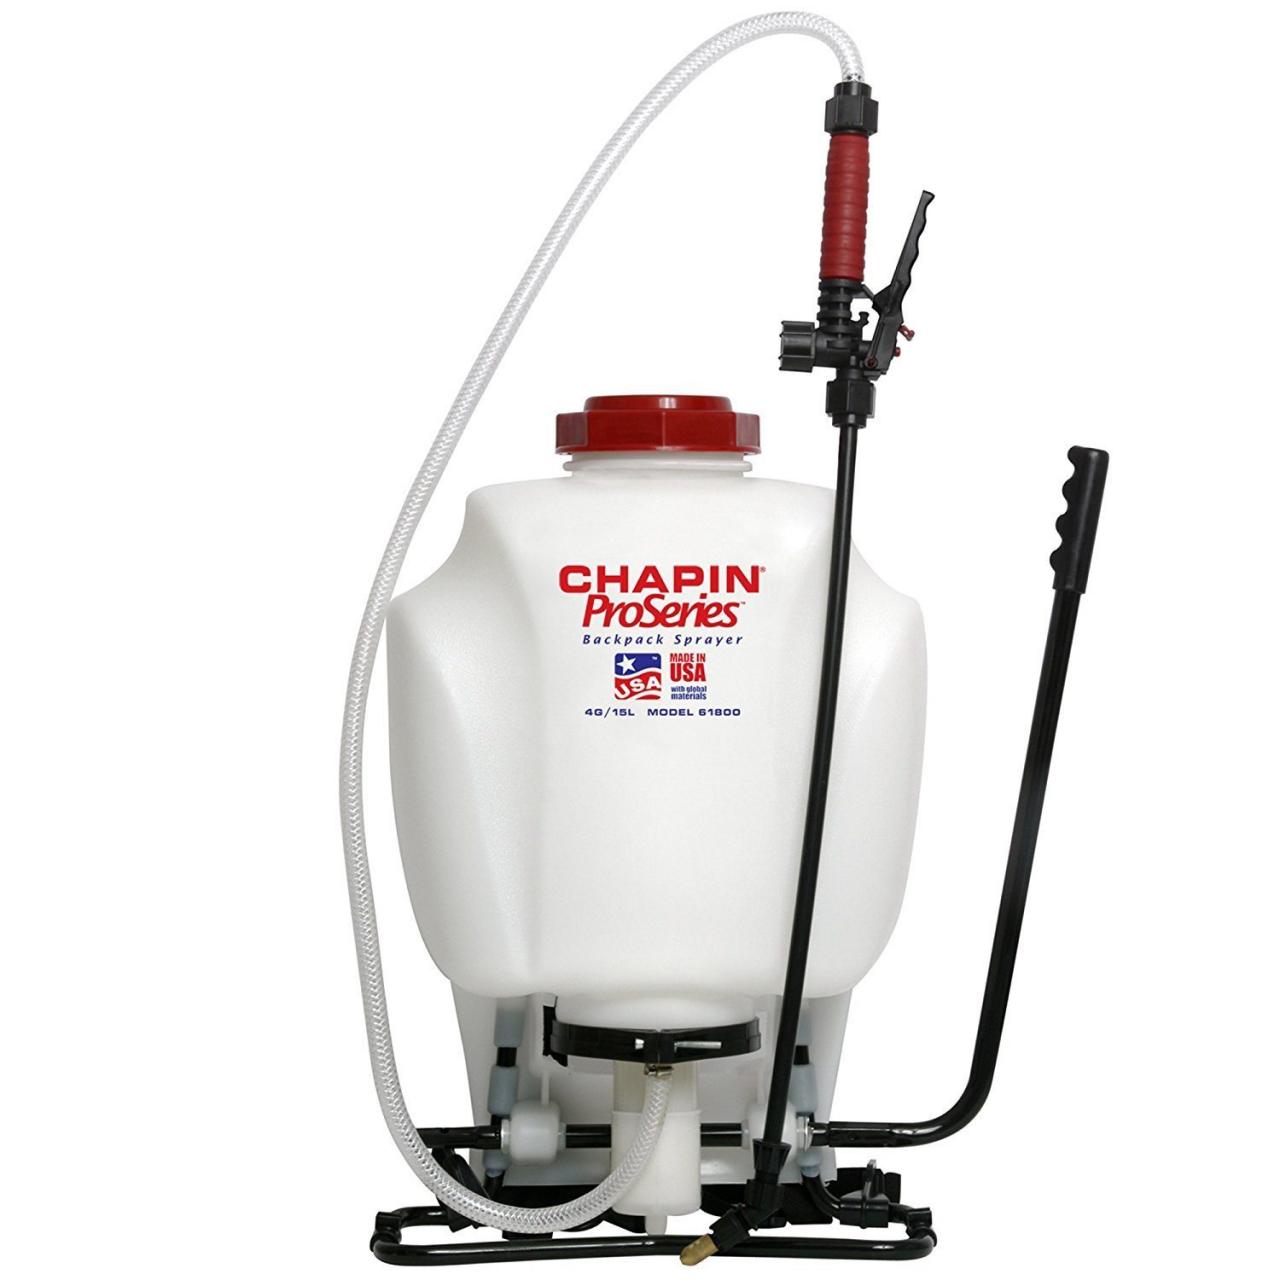 Chapin 61800 4 Gallon Backpack Sprayer | SprayerExpert.com